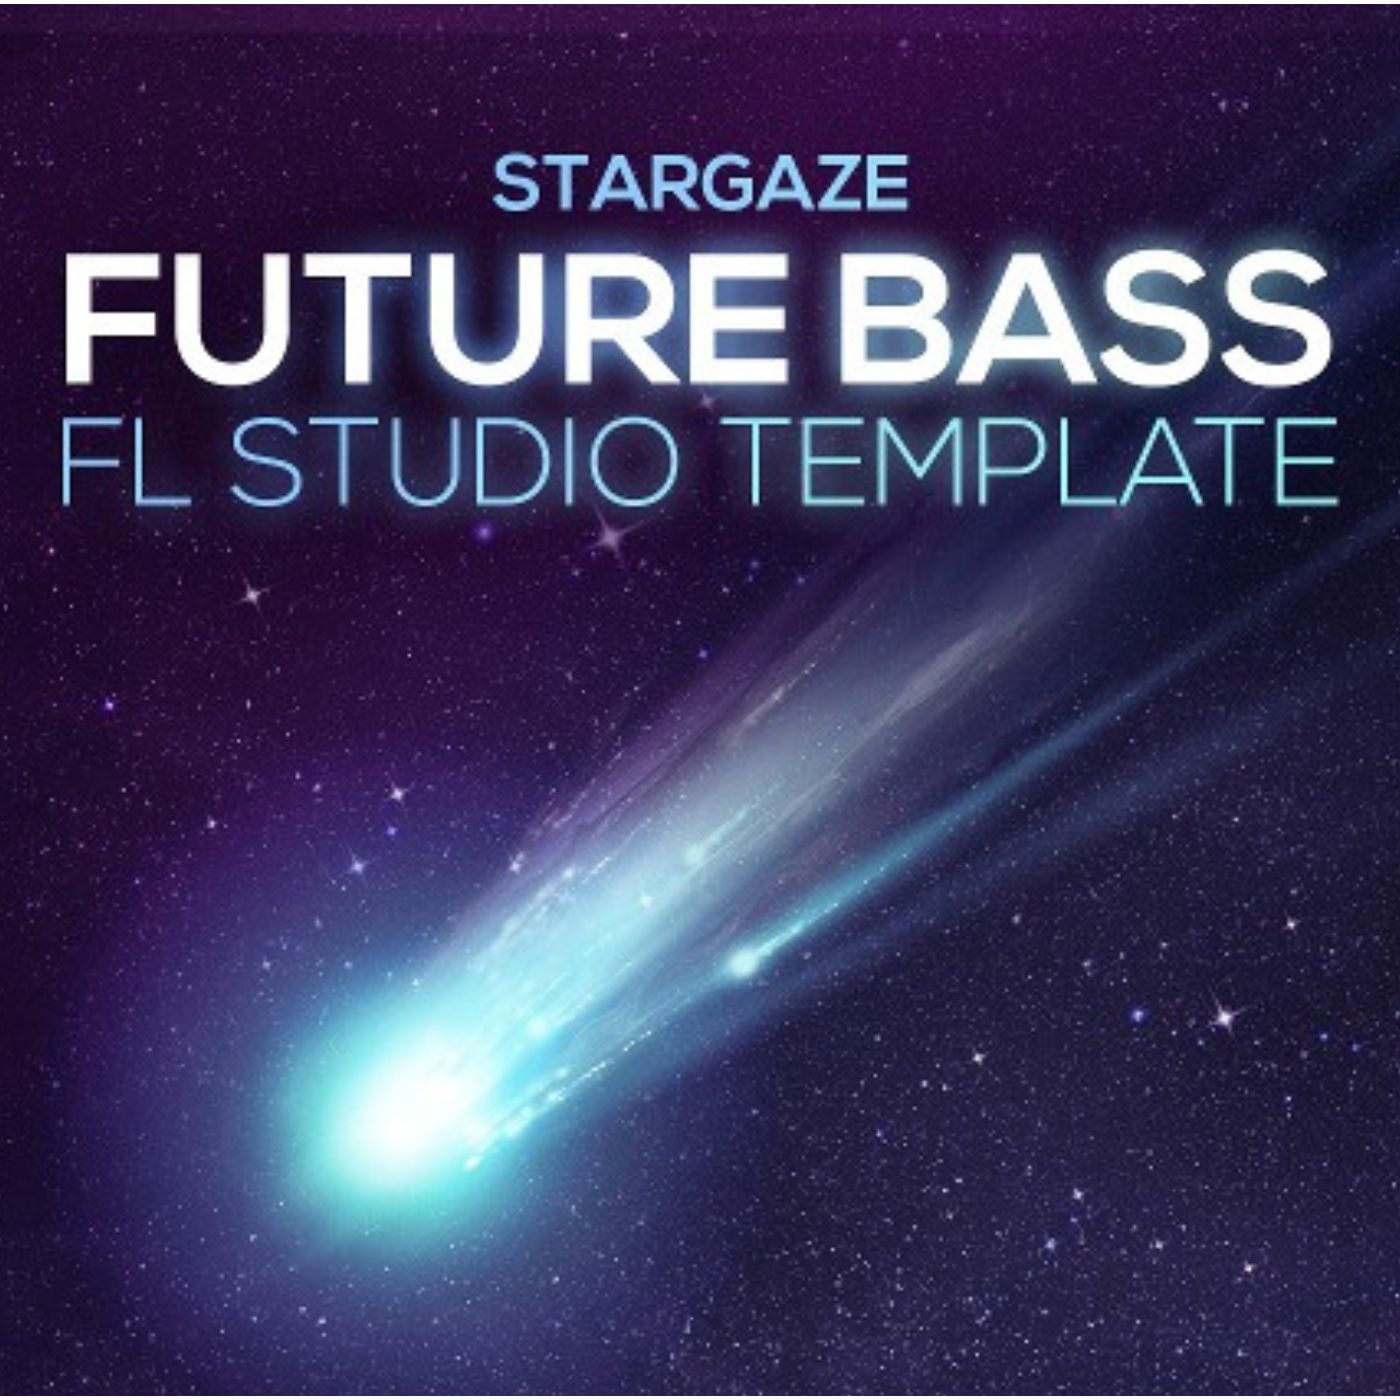 Professional Future Bass / Pop - STRGAZR - Scraps Audio